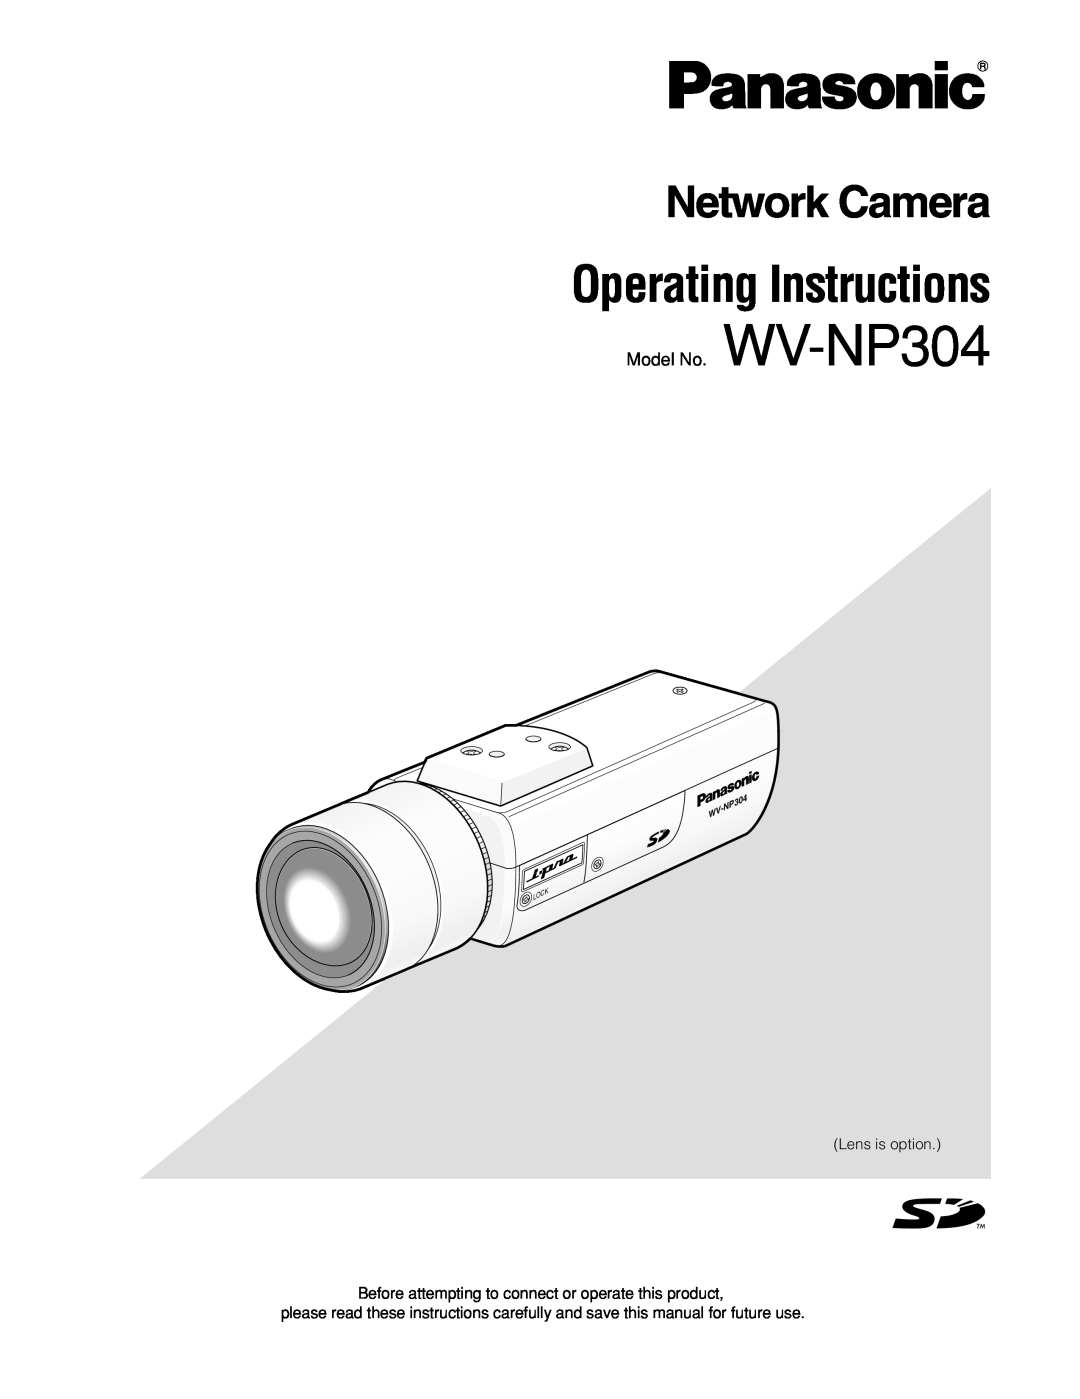 Panasonic WV-NP304 operating instructions Operating Instructions, Network Camera 